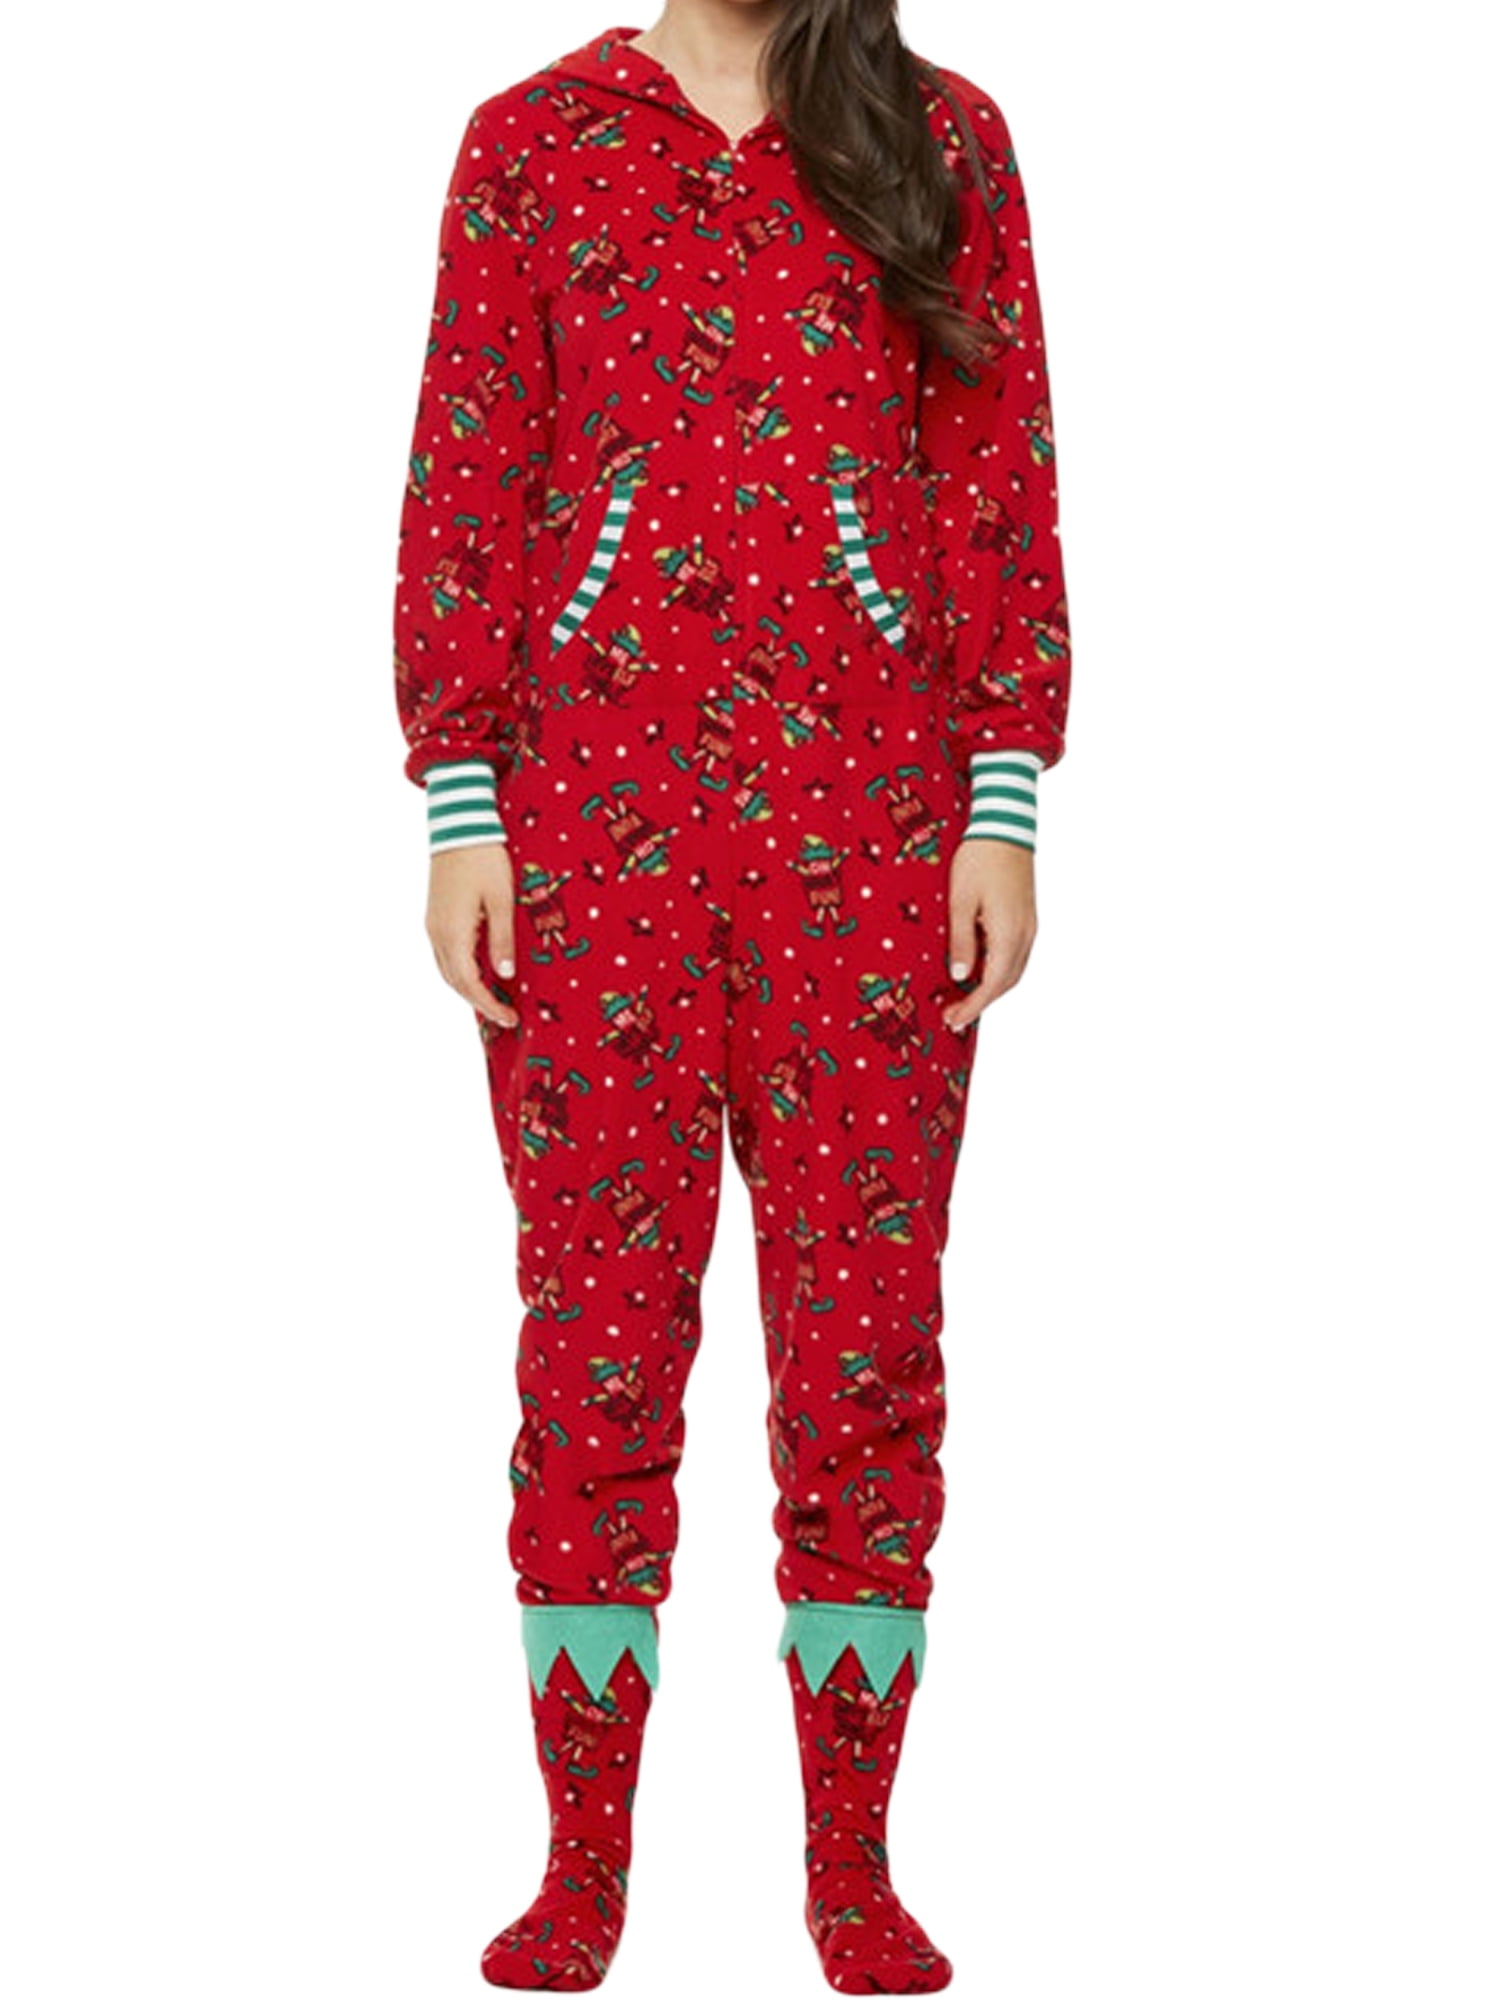 JSPOYOU Matching Family Christmas Pajamas Sets Funny Cute Cartoon Elk Printed Onesie Hooded Jumpsuit One Piece Sleepwear Set